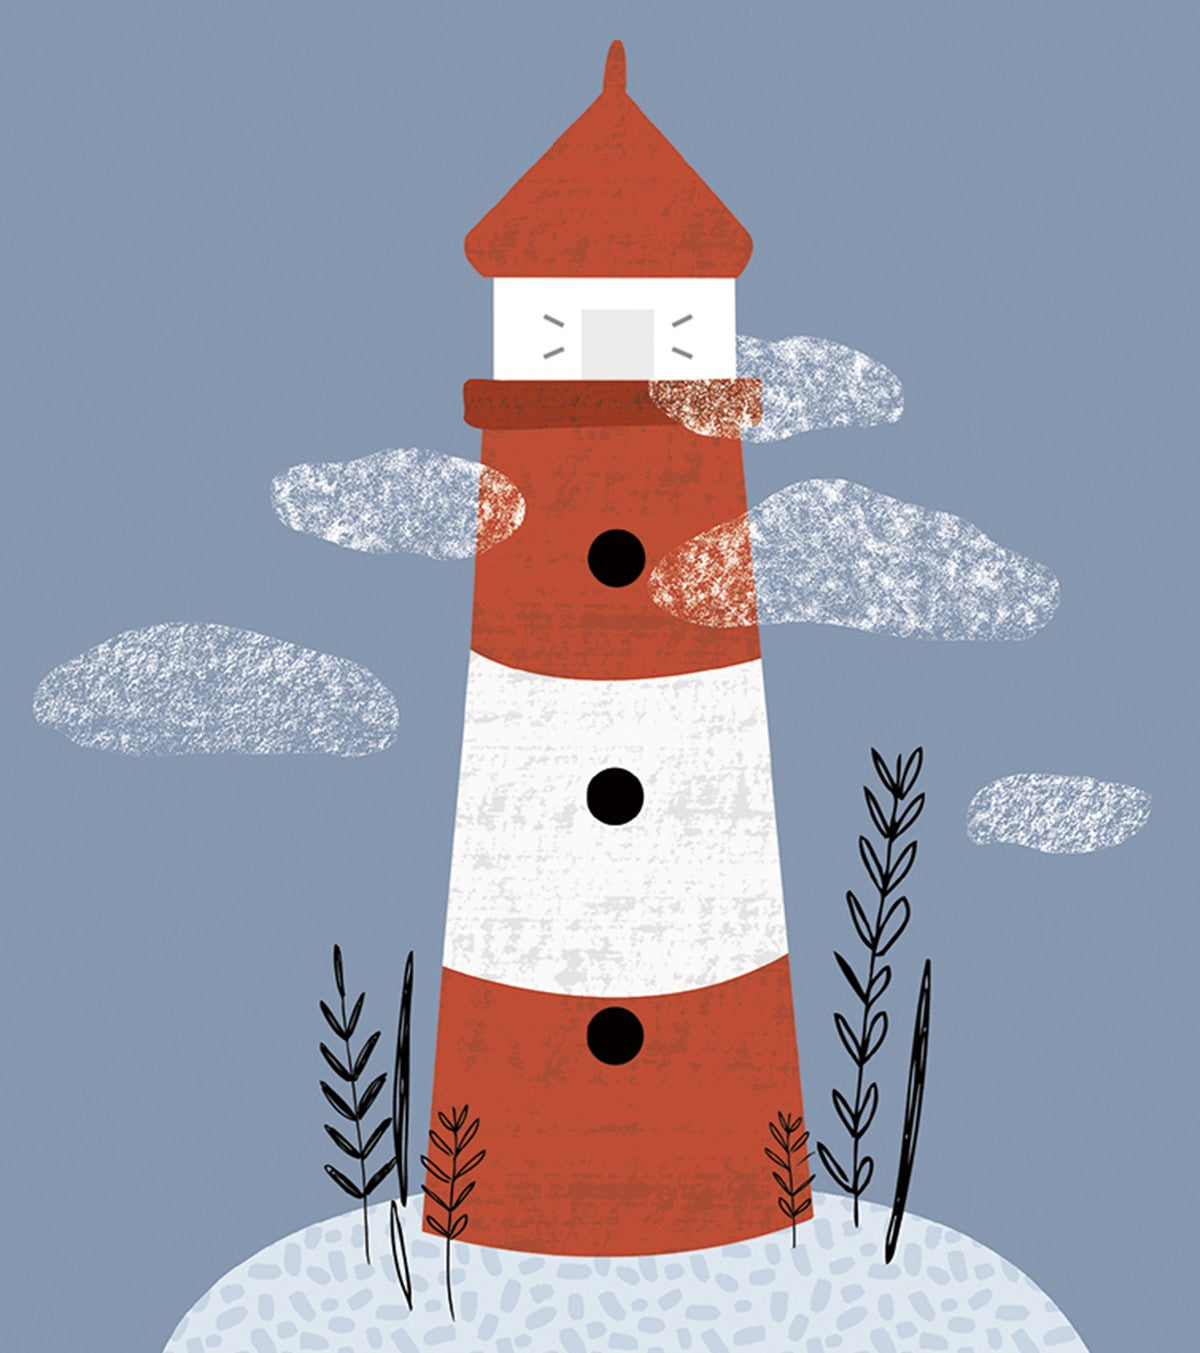 WILD ISLAND - Children's poster - The lighthouse